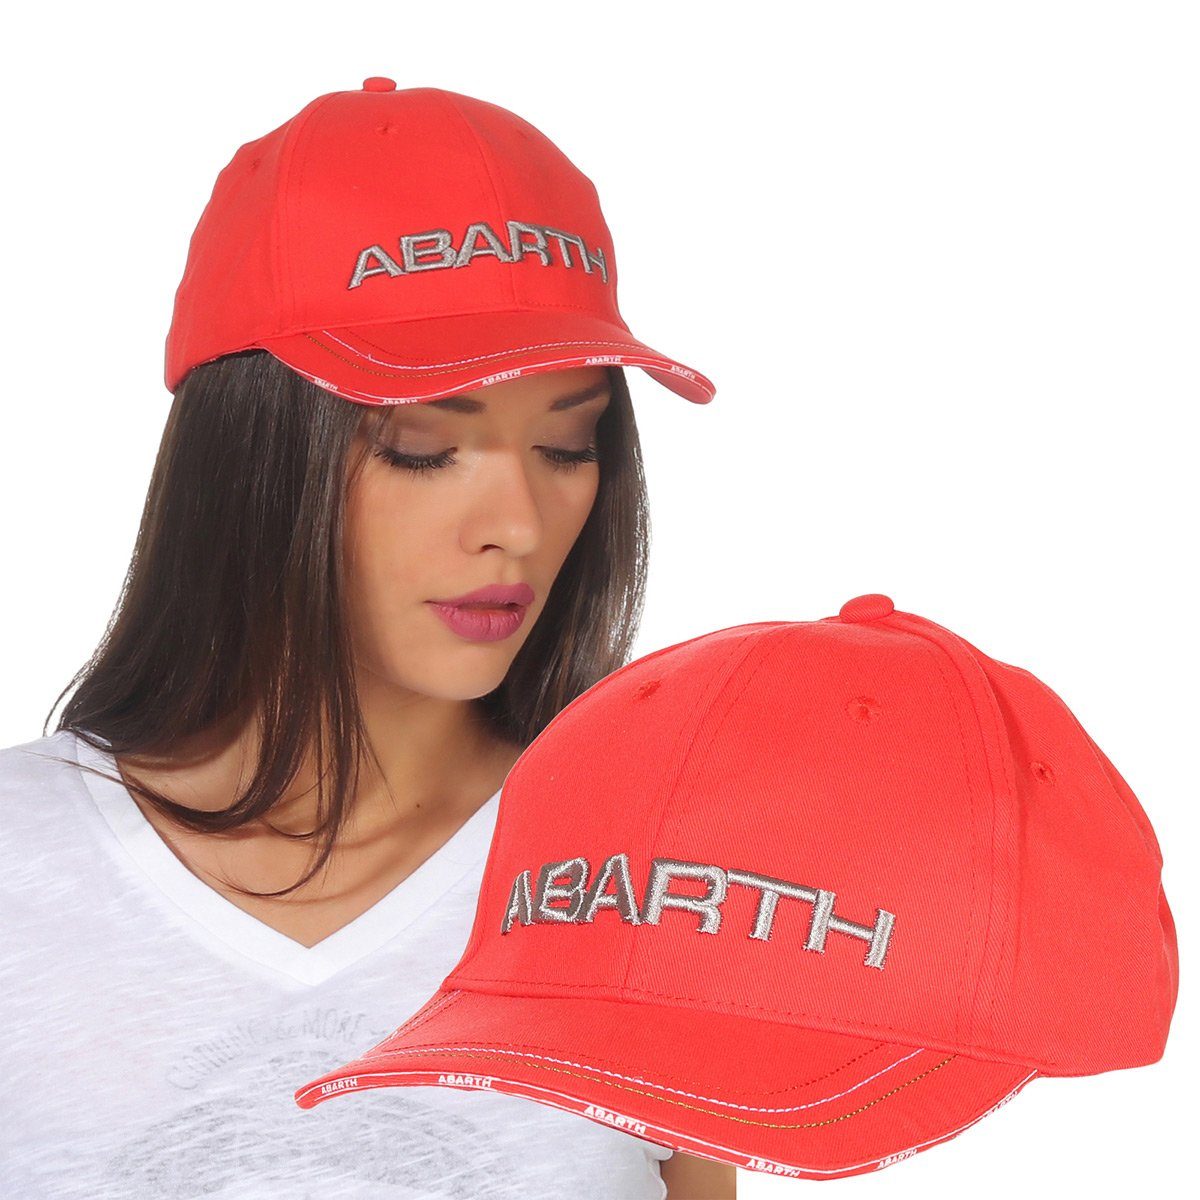 Rot Damen Markenwarenshop-Style Kappe Abarth Schildmütze Mütze Cap Cap - Basecap Baseball